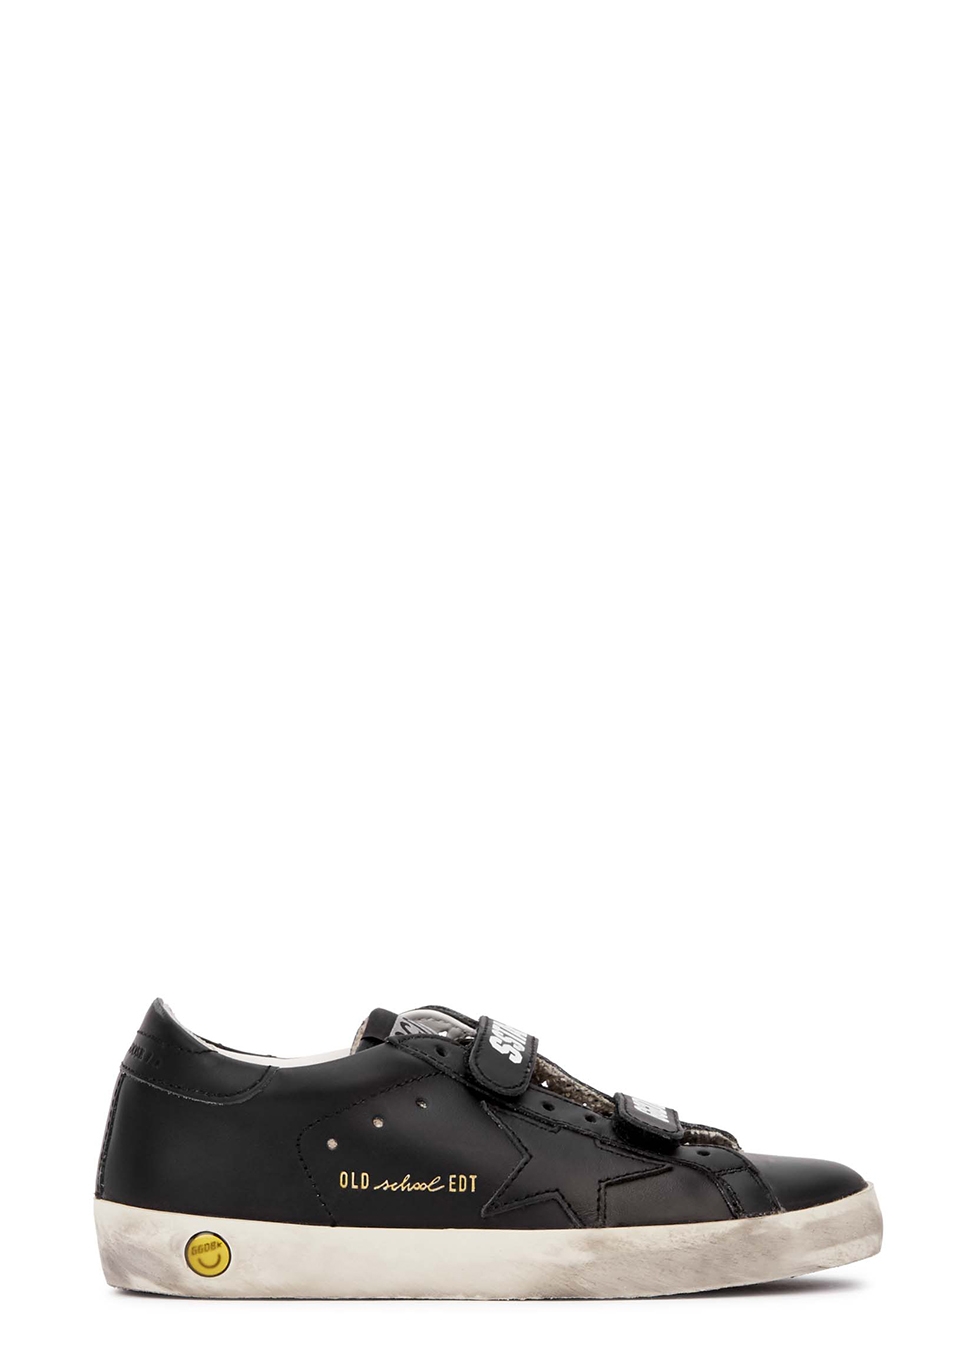 IT28-IT35 Old School black leather sneakers Harvey Nichols Shoes Flat Shoes School Shoes 